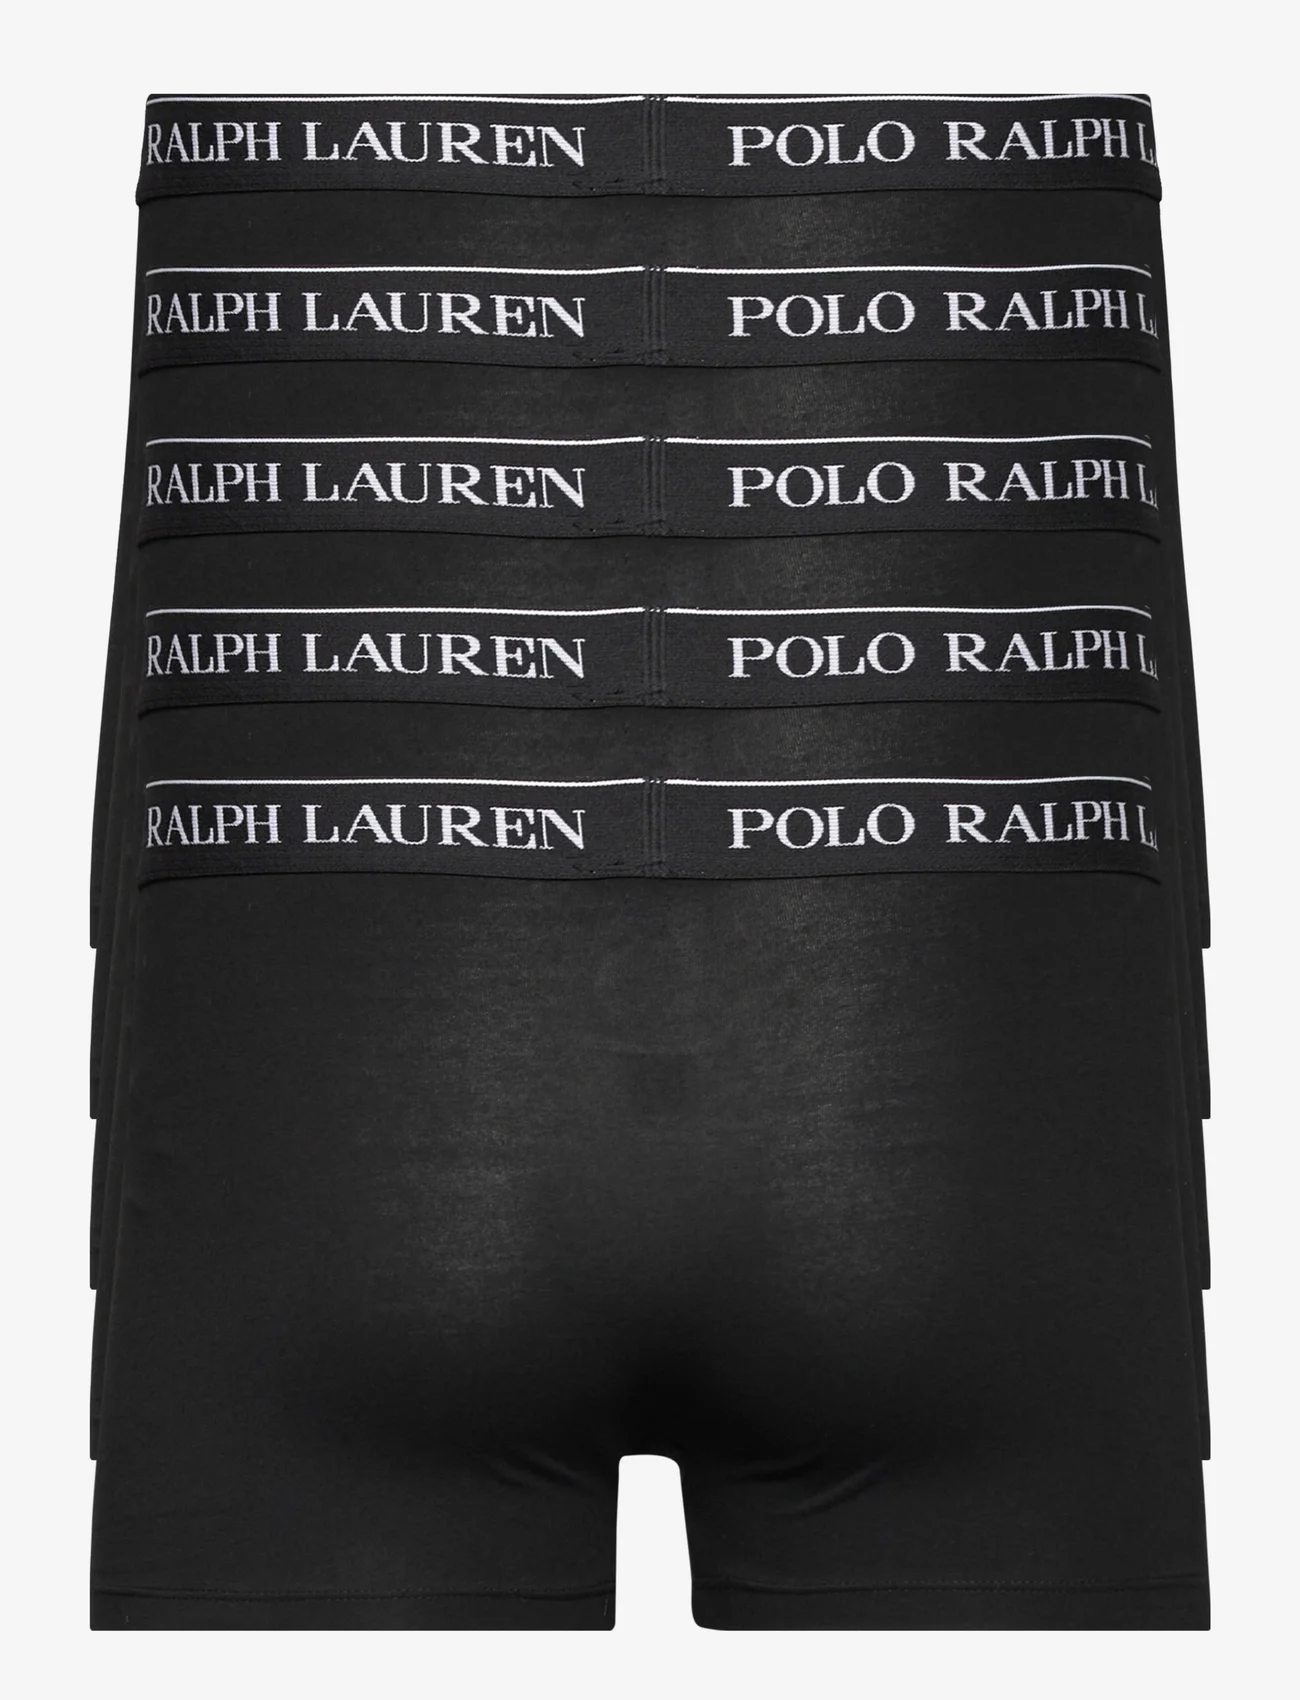 Polo Ralph Lauren Underwear - Classic Stretch Cotton Trunk 5-Pack - majtki w wielopaku - 5pk black - 1